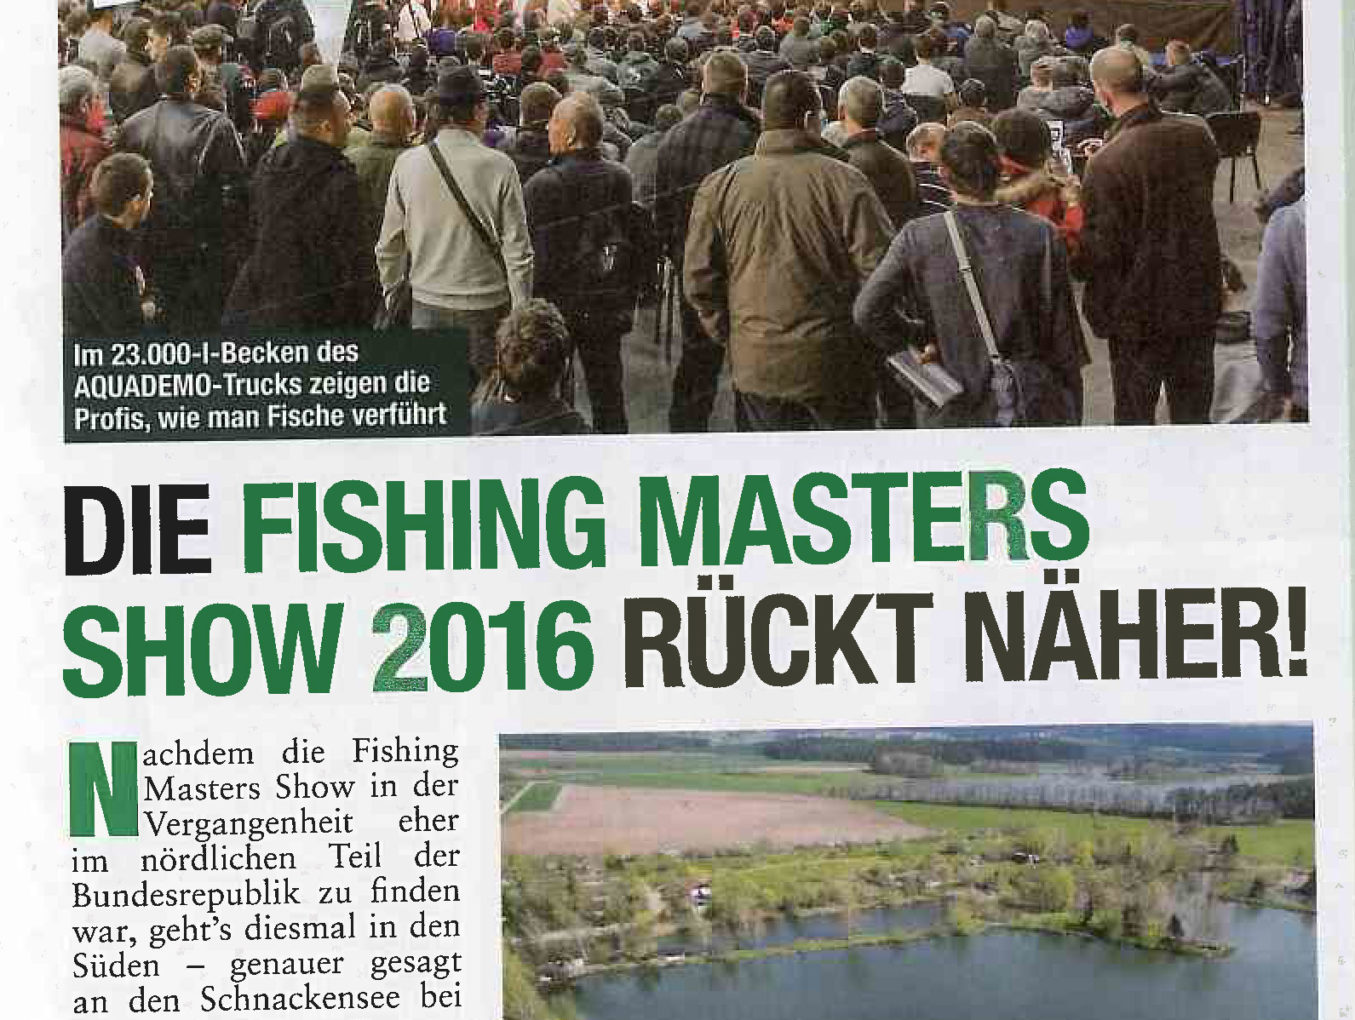 Die Fishing Masters Show 2016 rückt näher